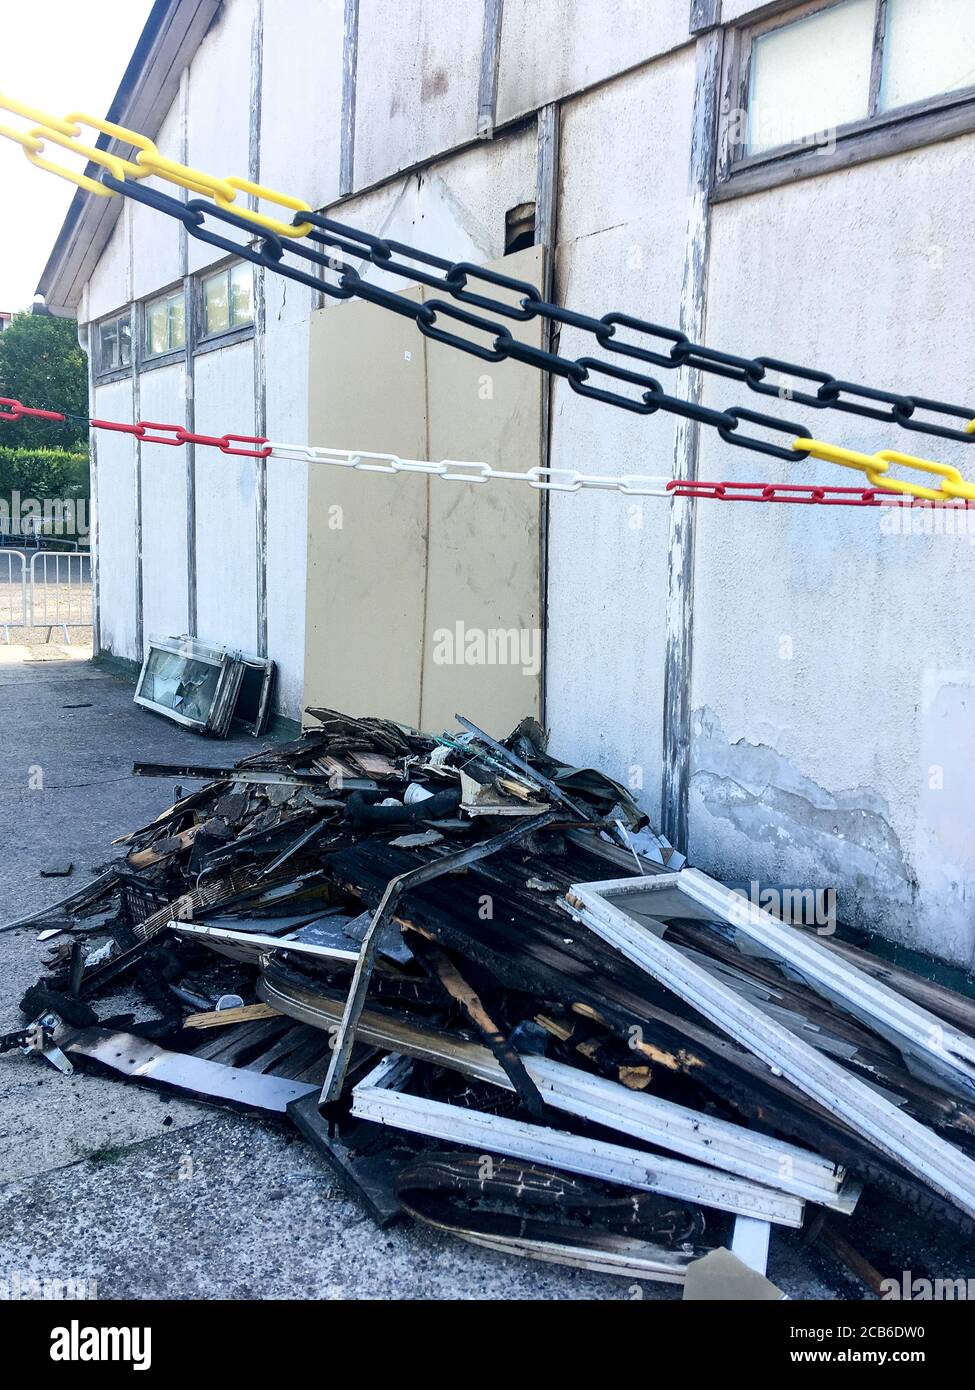 Criminal fire at Bron mosque, Bron, Auvergne-Rhone-Alps region, France, Stock Photo